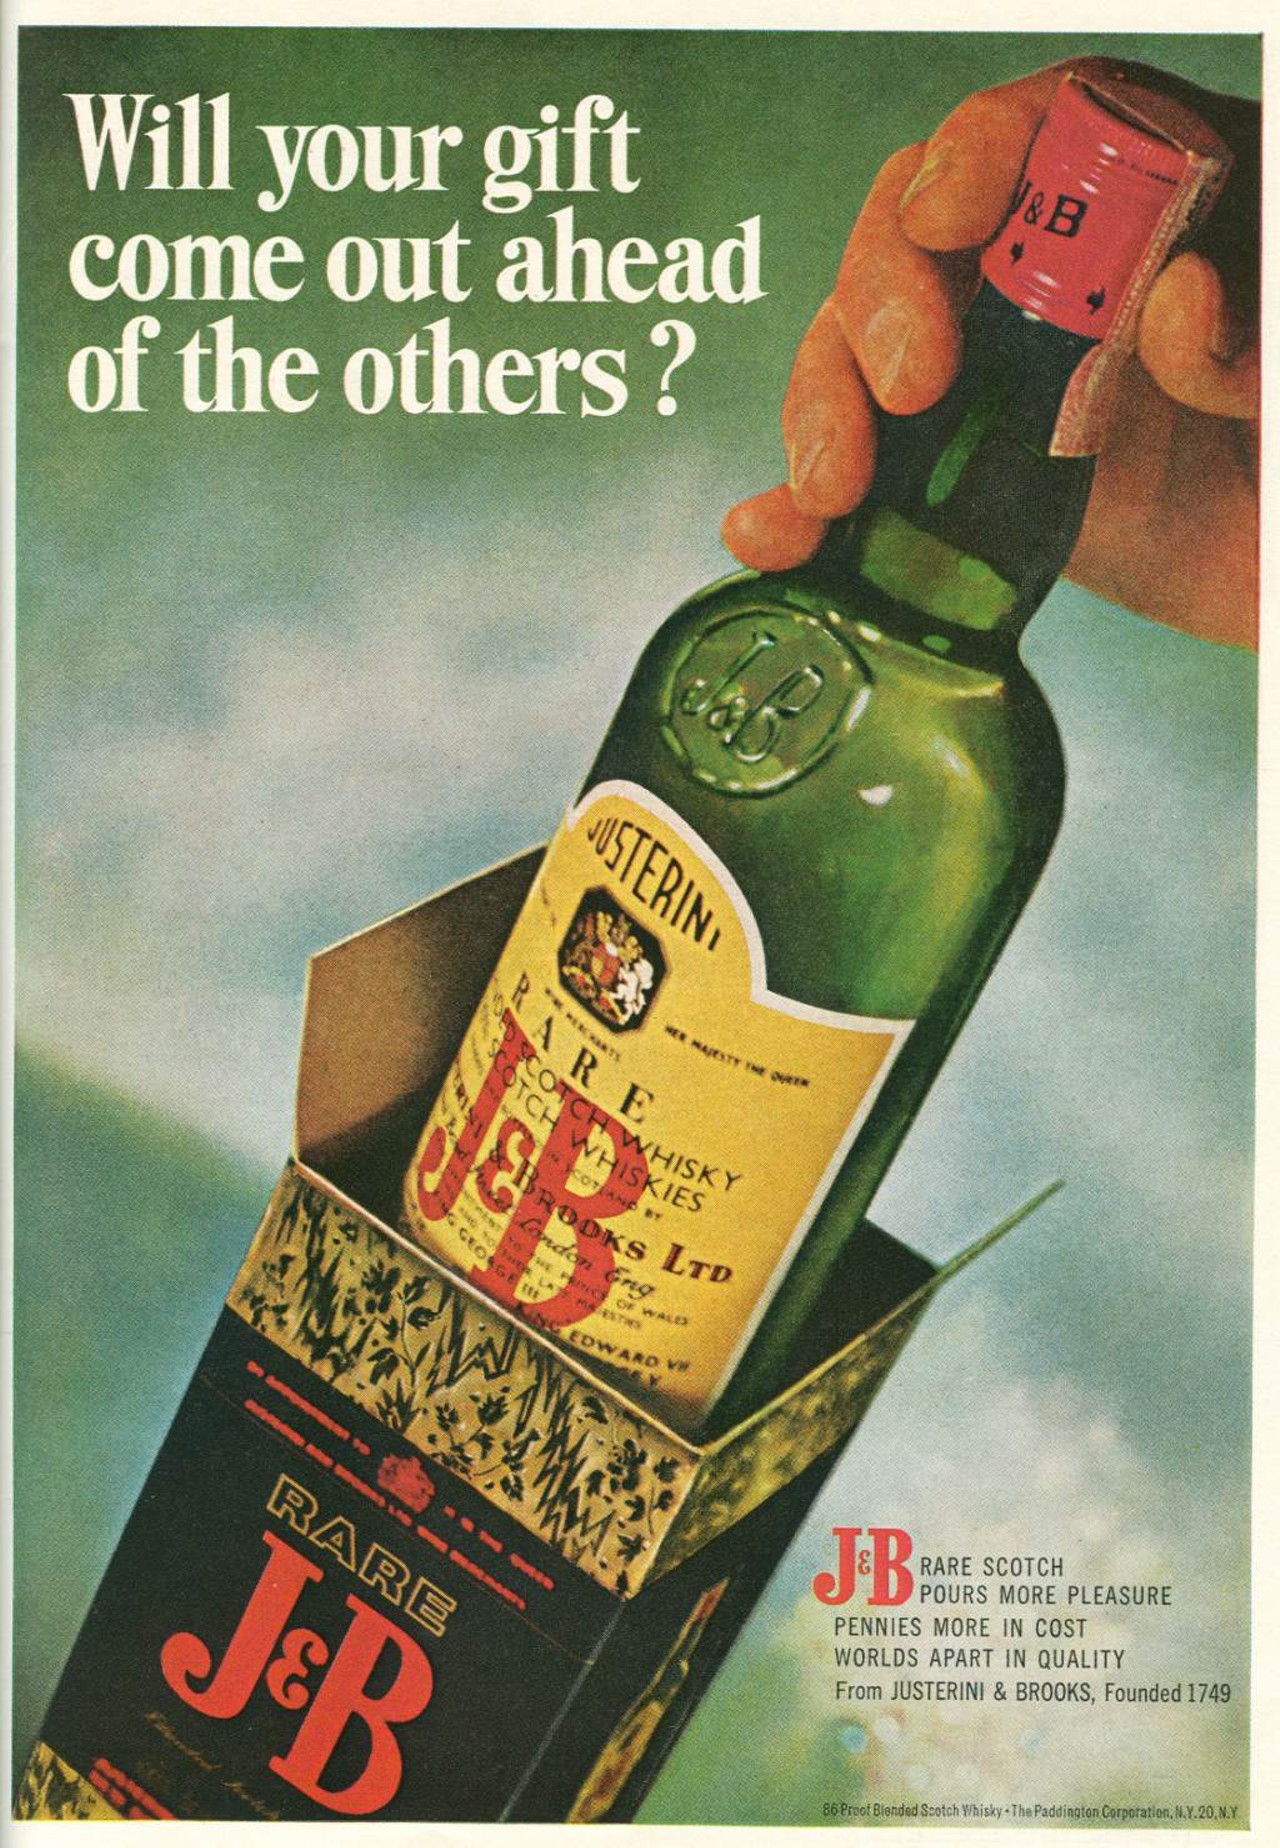 J&B Scotch holiday ad, 1967 (Photo via rchappo2002, Flickr Creative Commons)